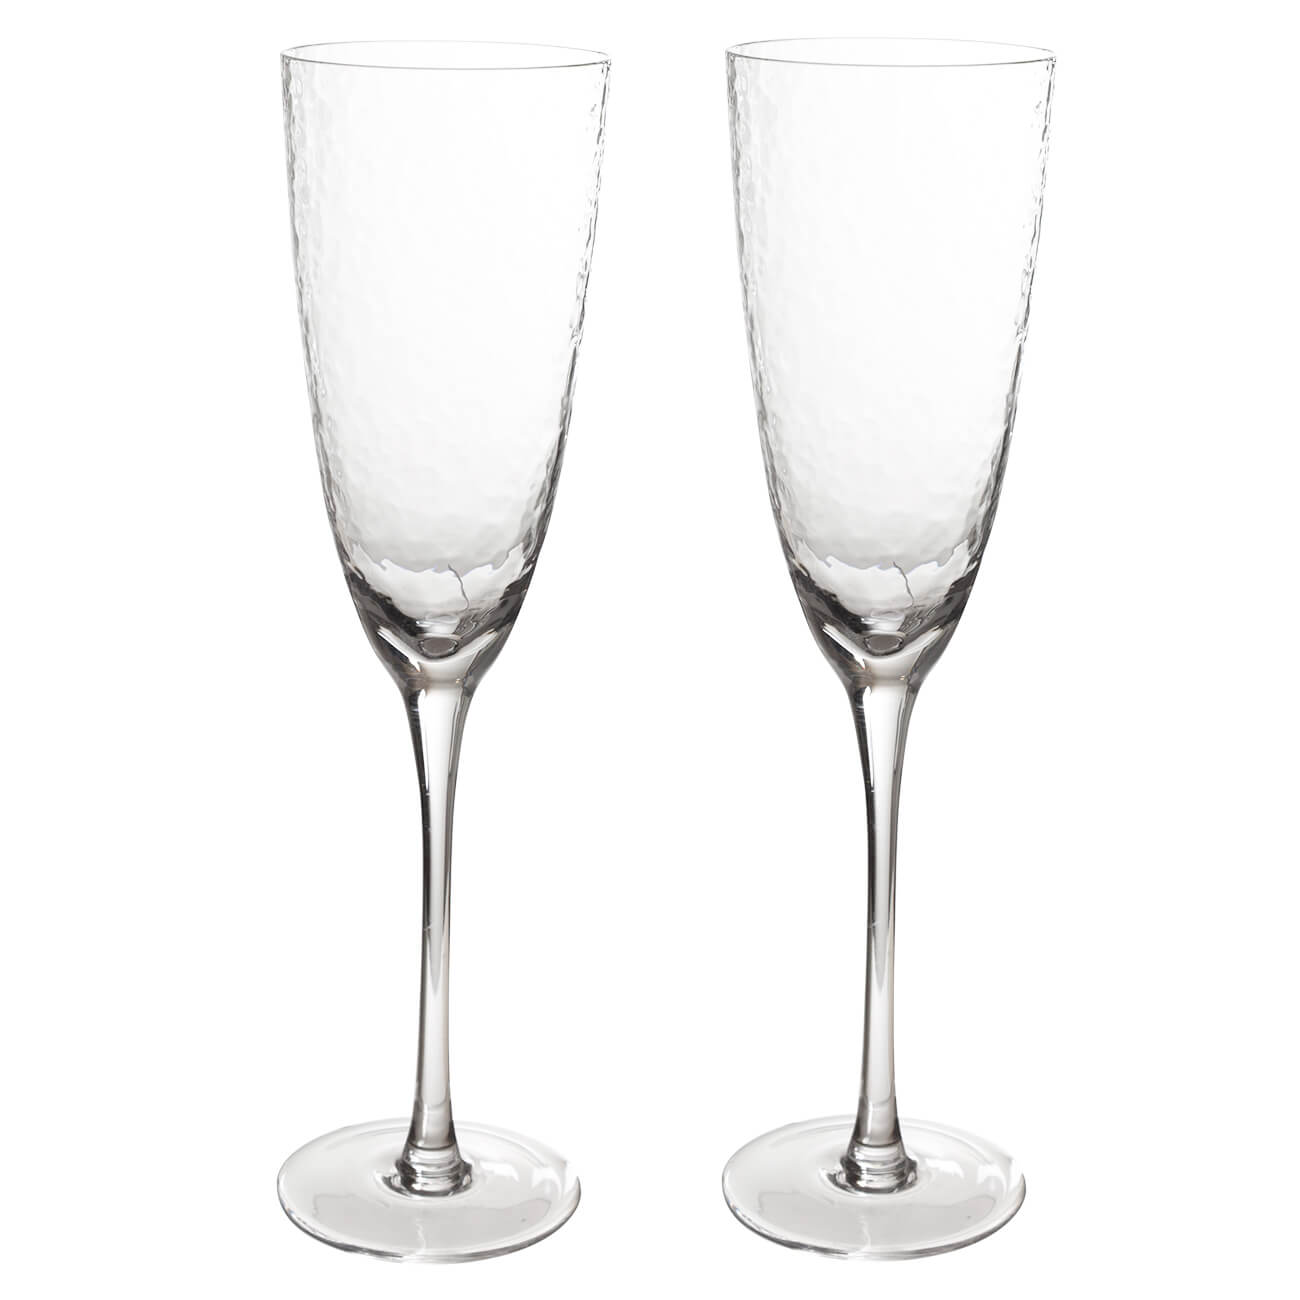 Бокал для шампанского, 275 мл, 2 шт, стекло, Ripply бокал для вина 400 мл 2 шт стекло перламутр ripply polar